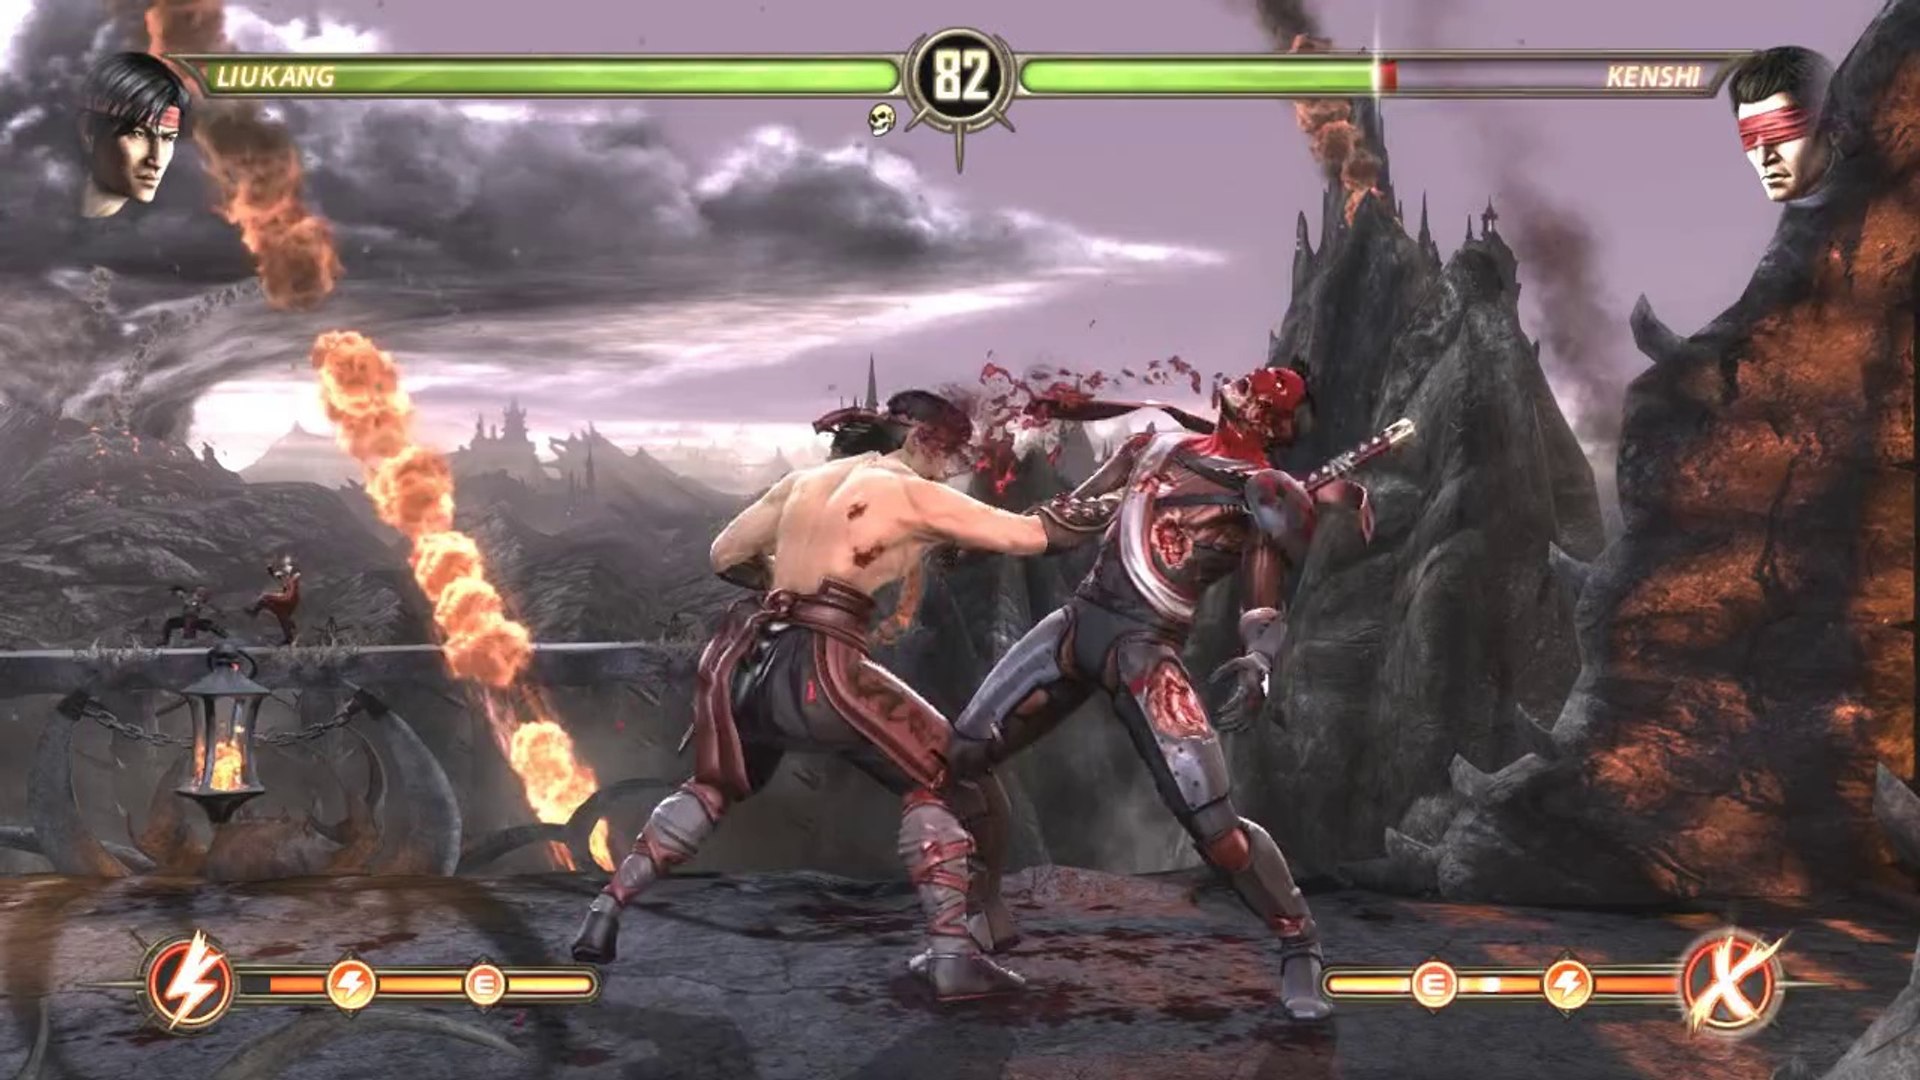 Mortal Kombat Komplete Edition. Liu Kang vs Kenshi